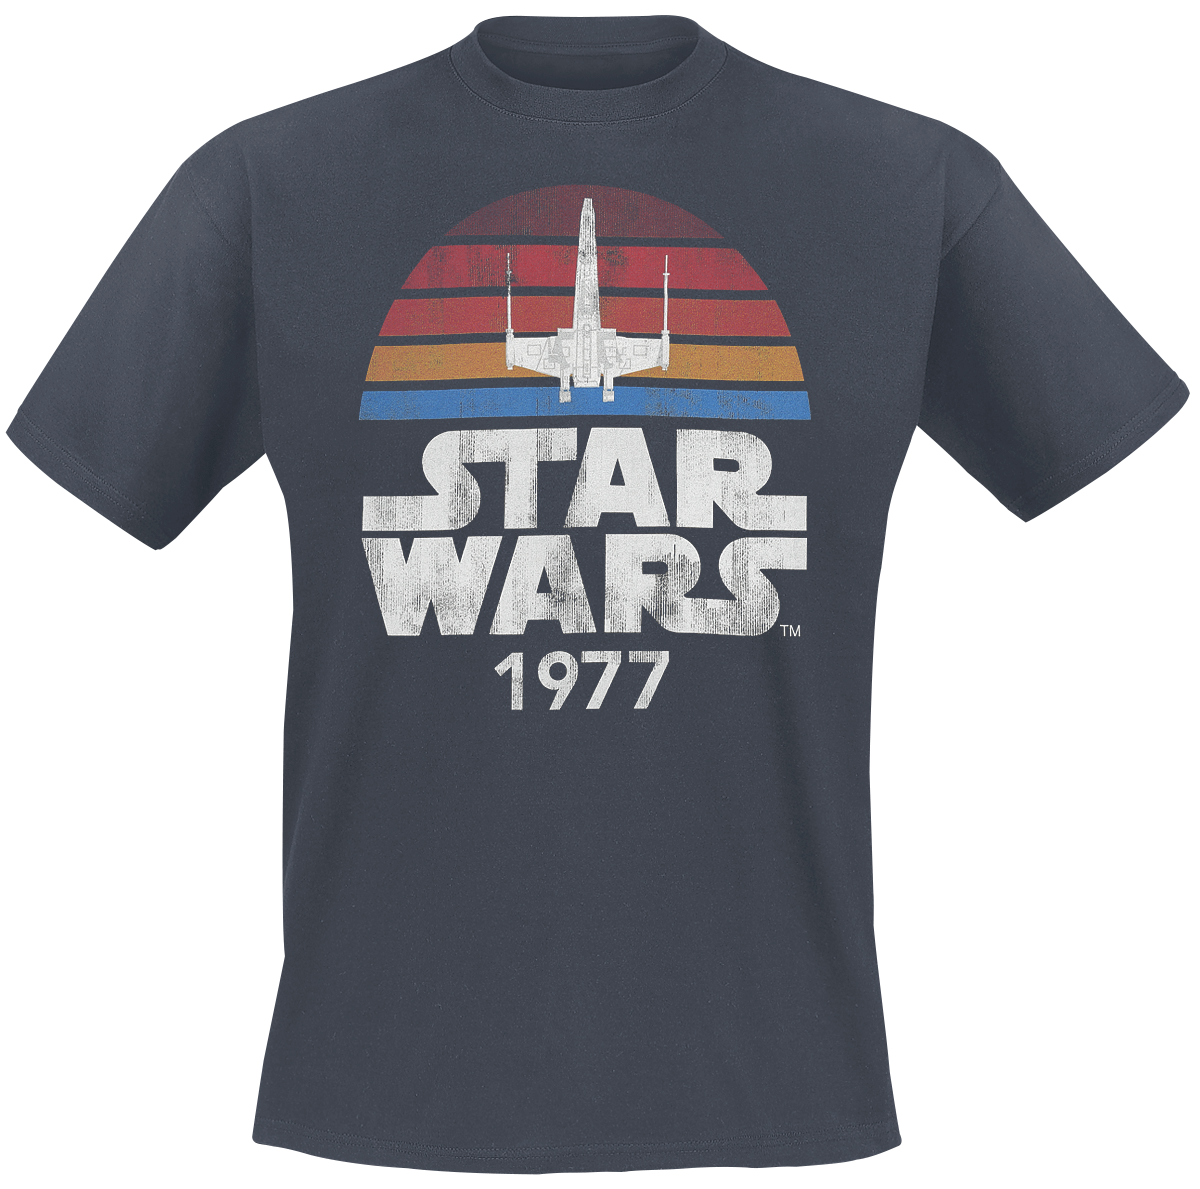 Star Wars - Since 1977 - T-Shirt - anthrazit